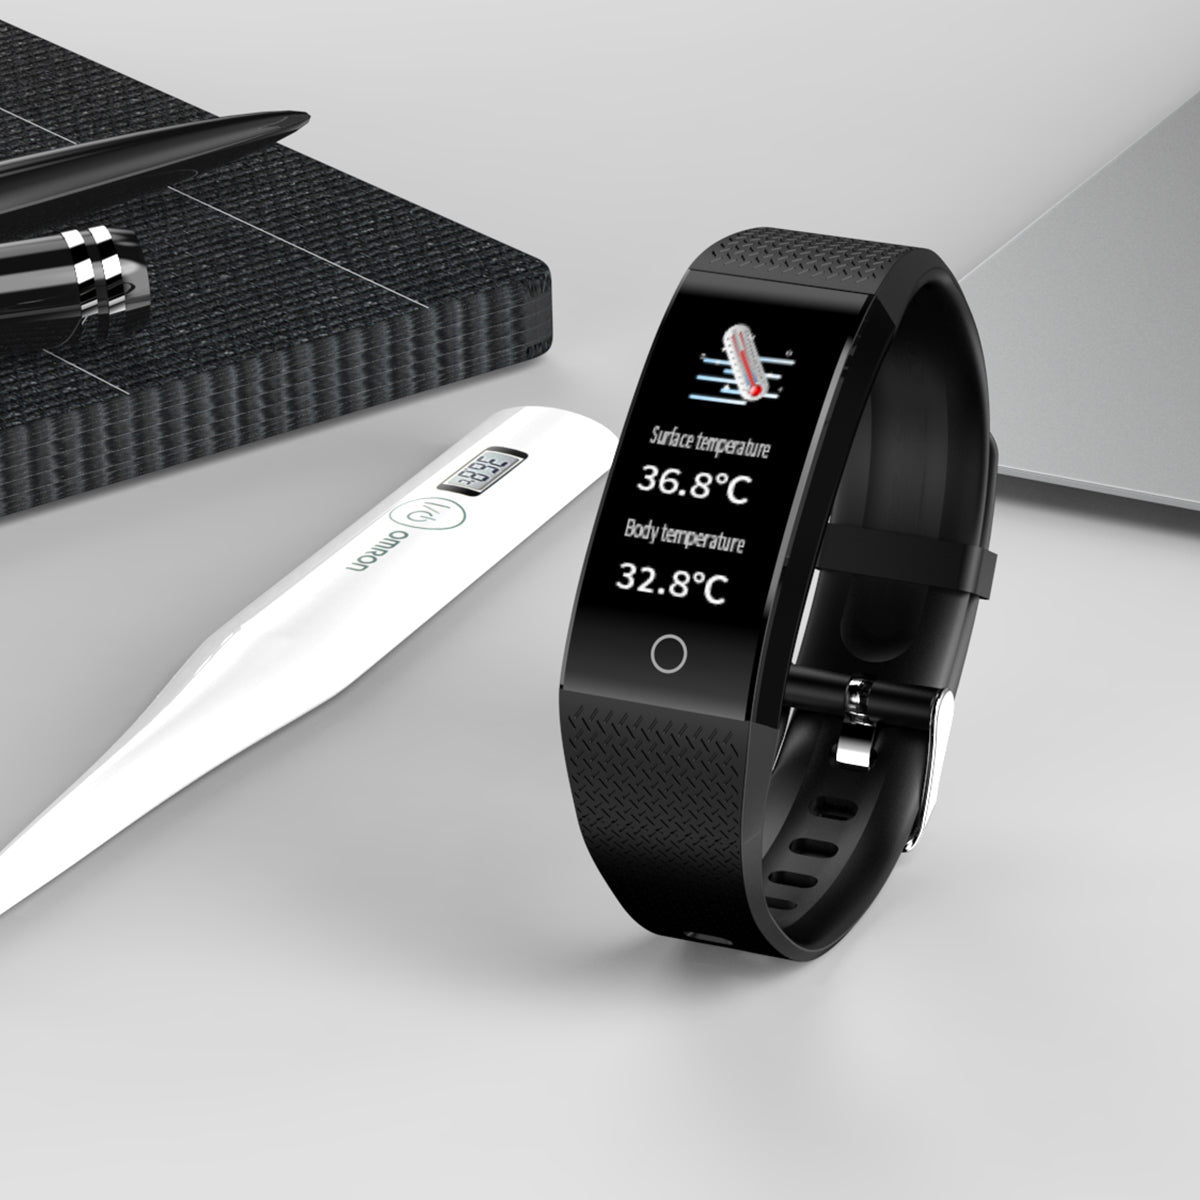 MPG 2.0 Premium Fitness Tracker